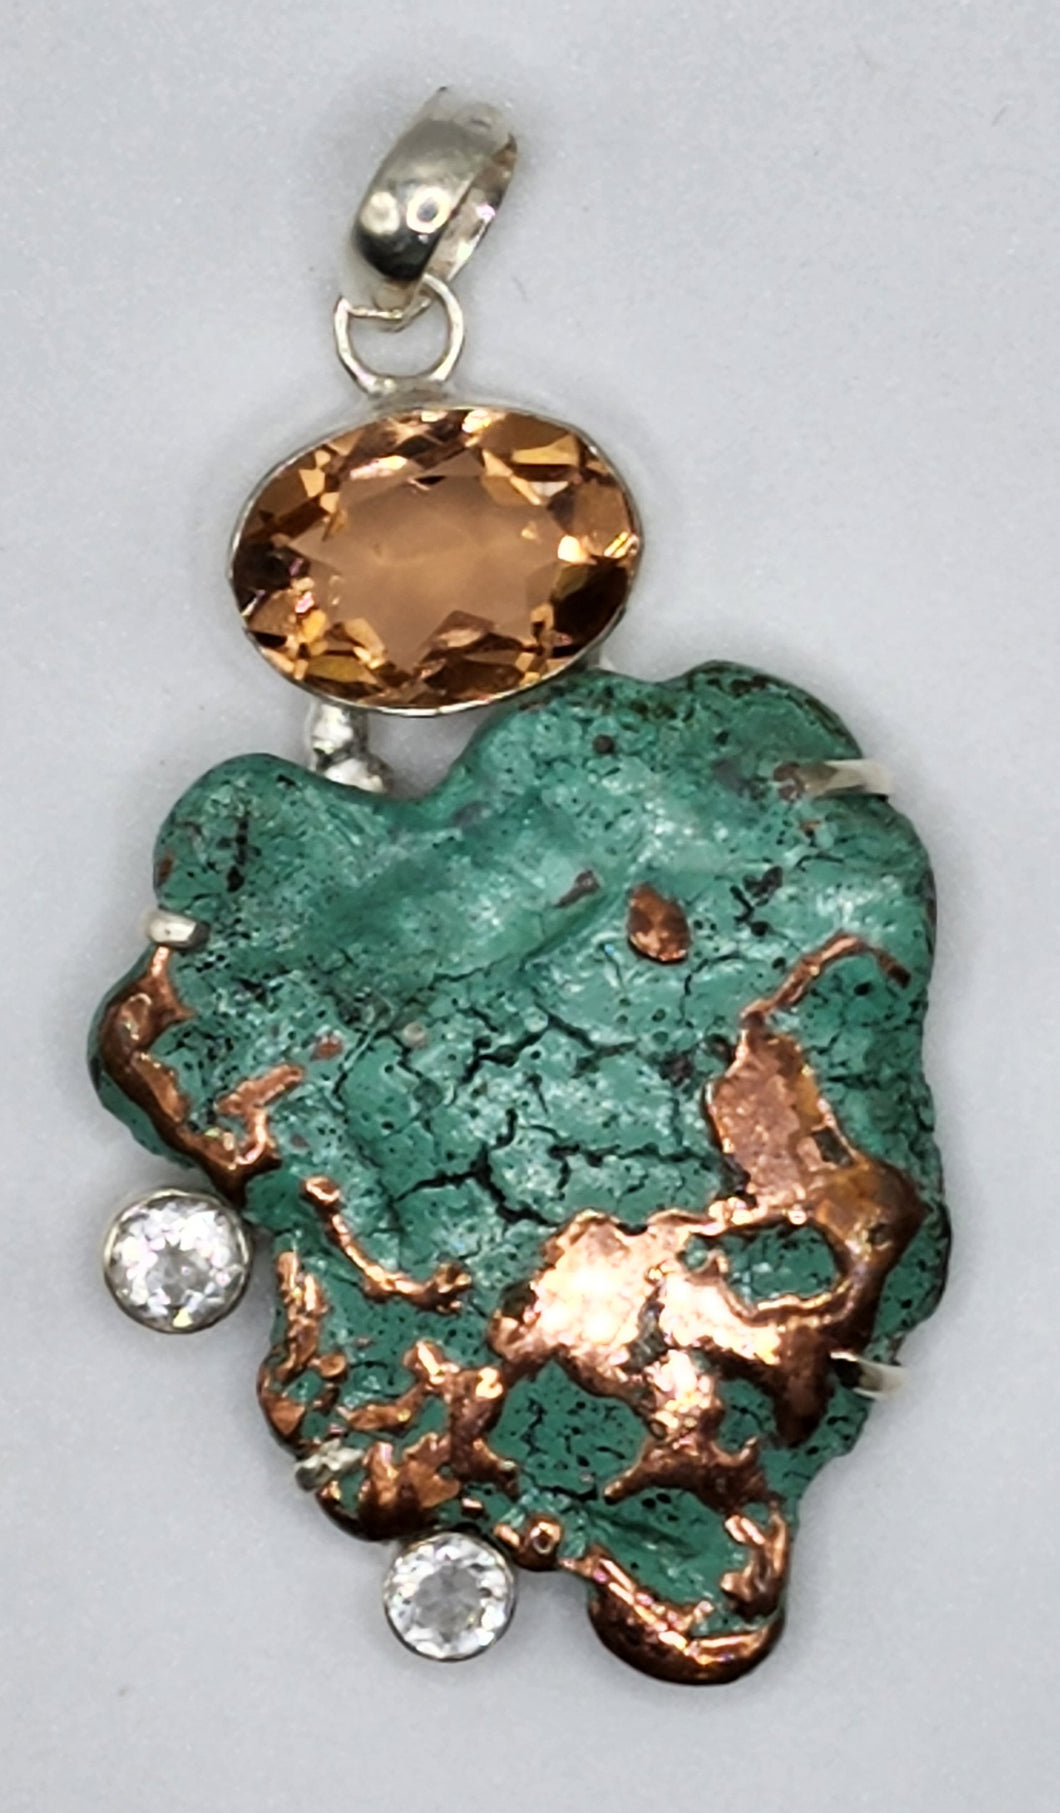 Peach Quartz Gemstone With Copper Ore Pendant Set in 925 Sterling Silver